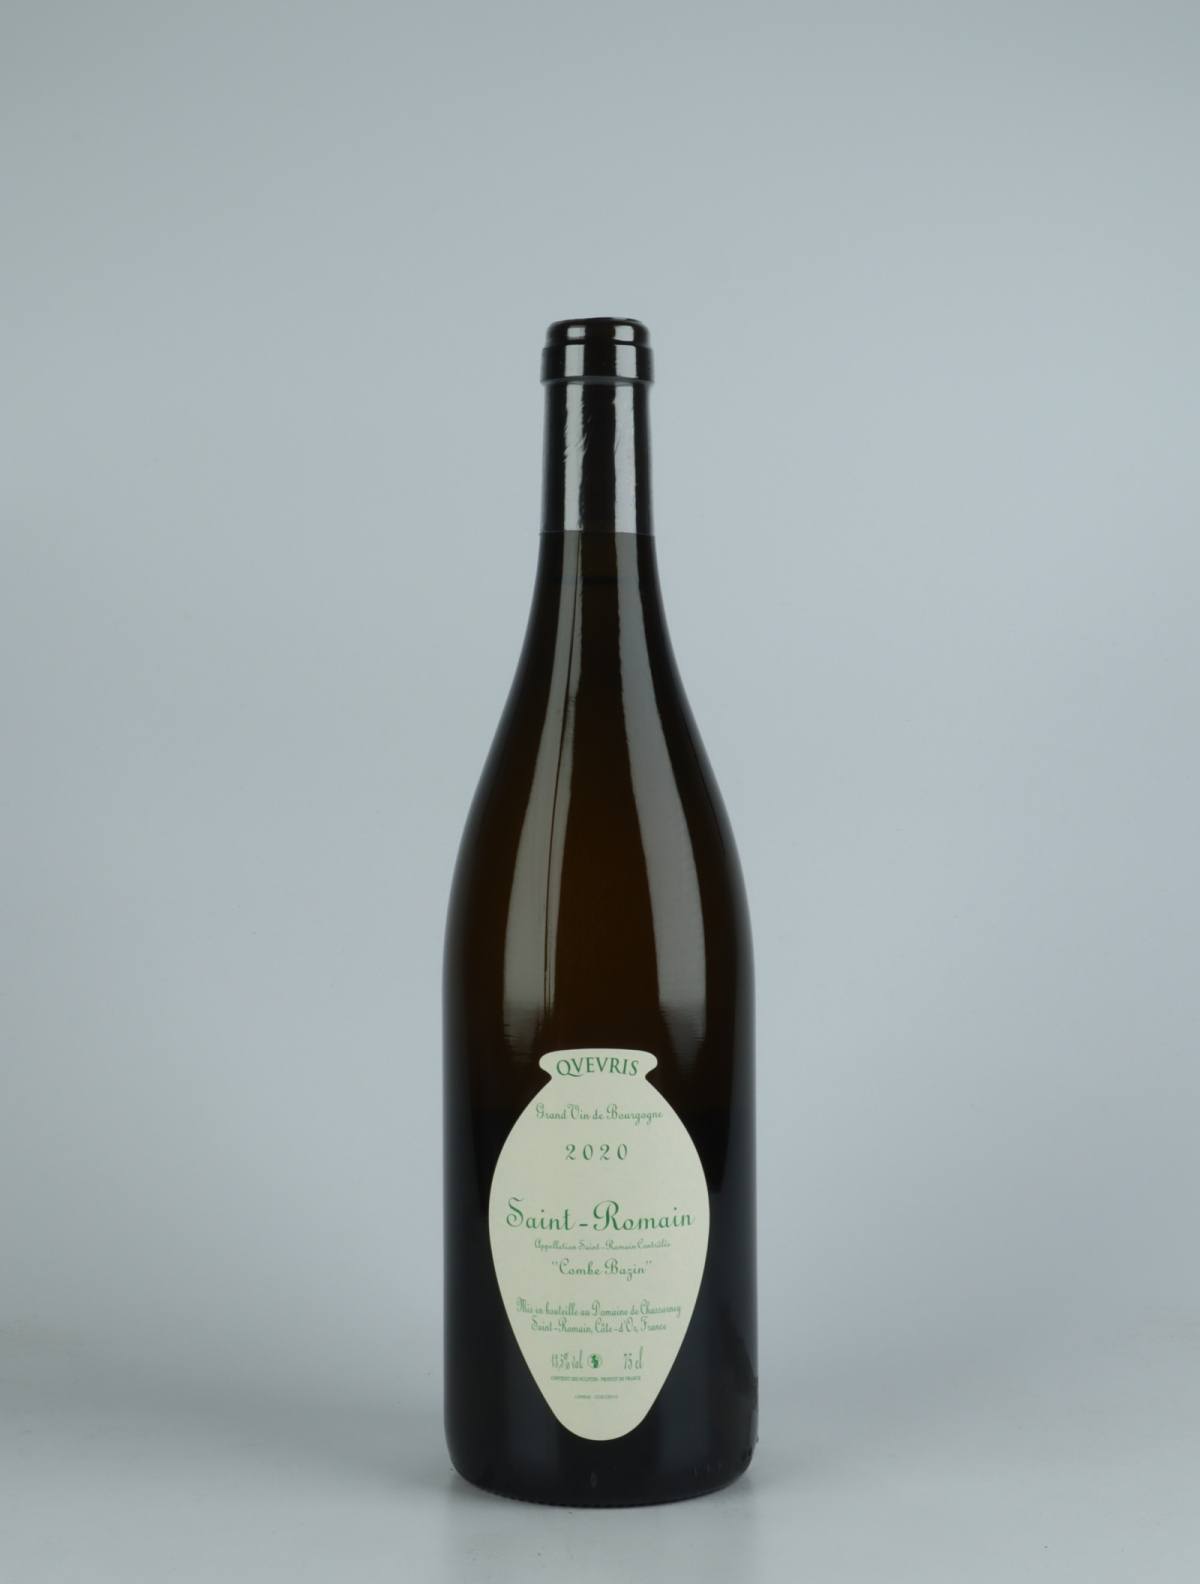 En flaske 2020 Saint Romain Blanc - Combe Bazin - Qvevris Hvidvin fra Domaine de Chassorney, Bourgogne i Frankrig